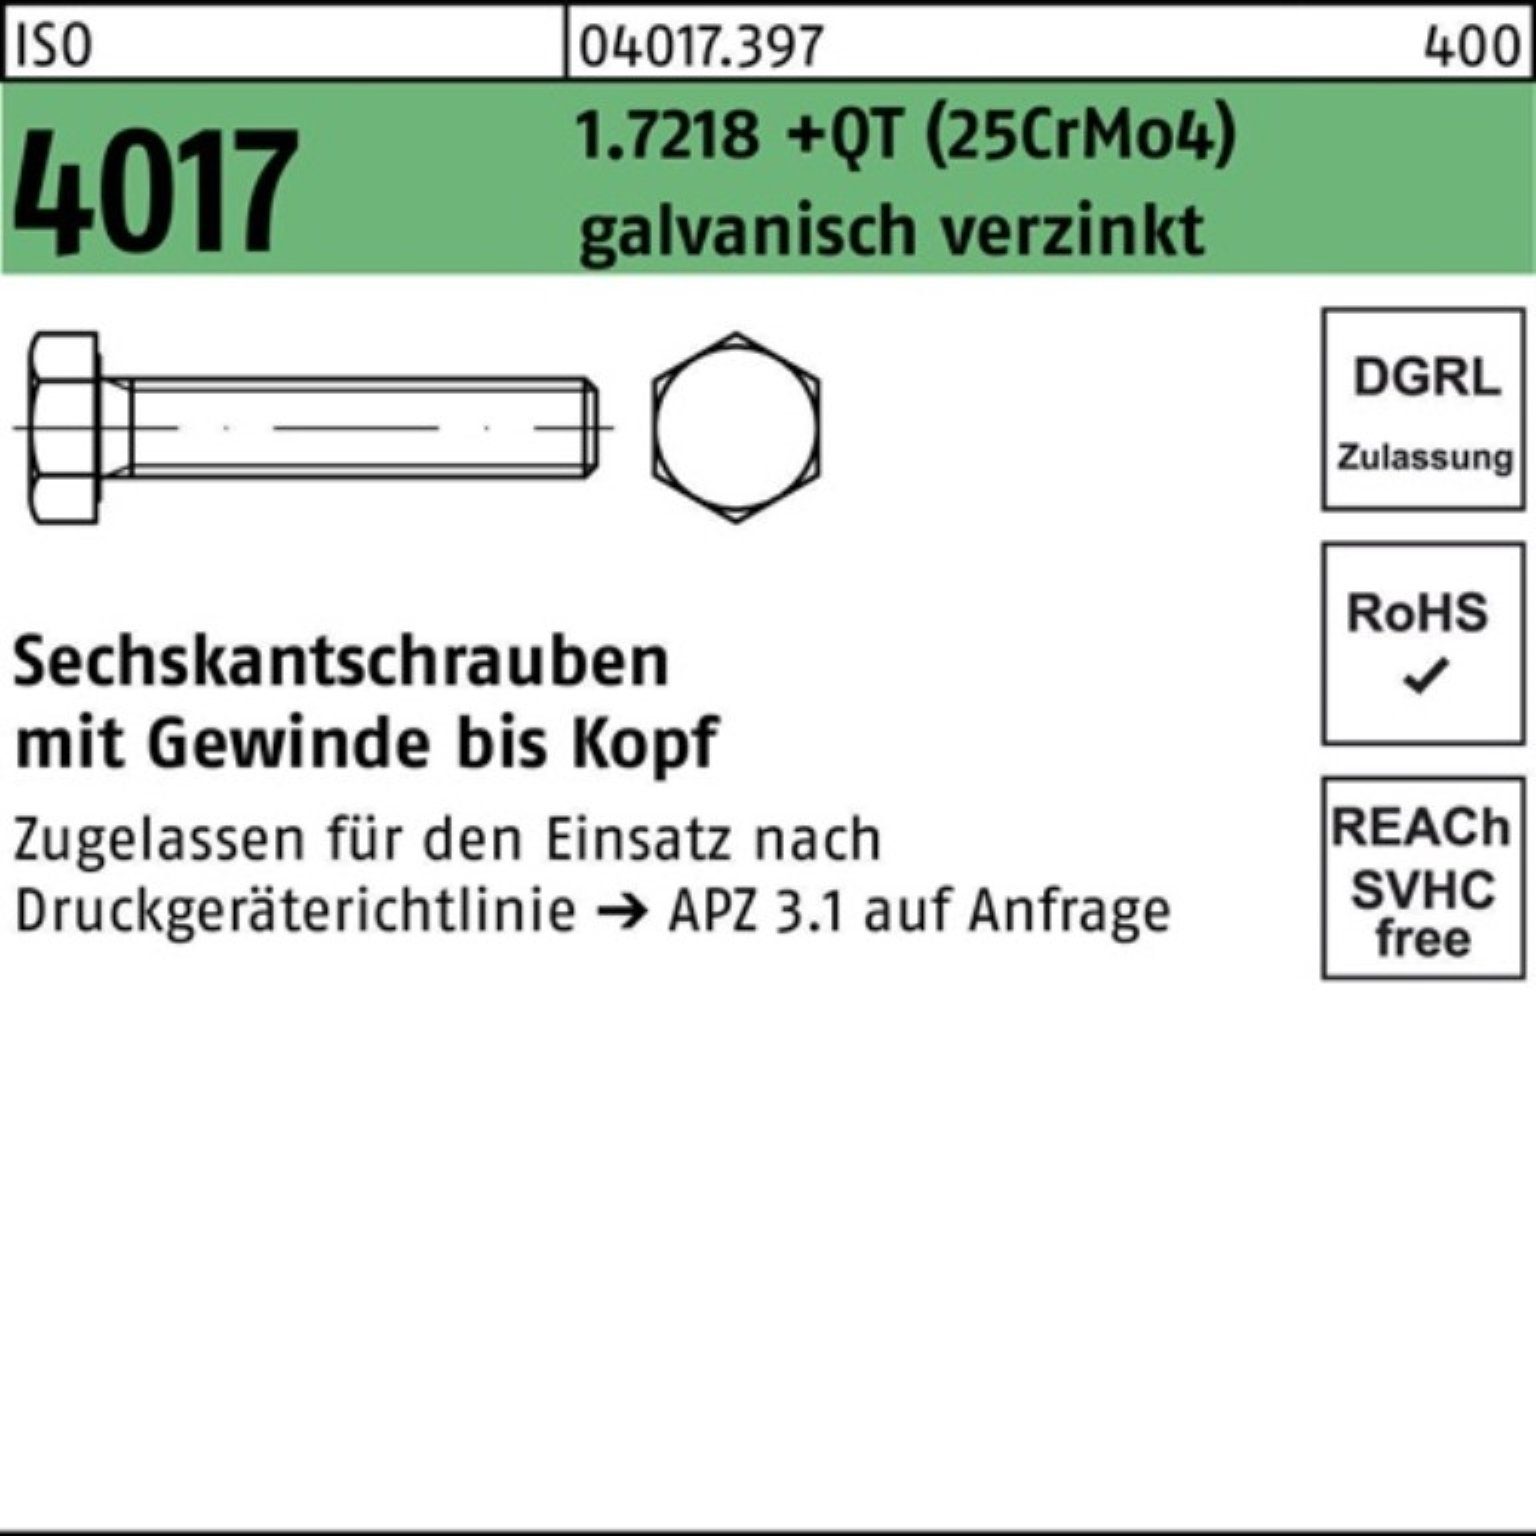 4017 M27x90 Sechskantschraube Bufab g VG 1.7218 100er +QT Pack (25CrMo4) ISO Sechskantschraube